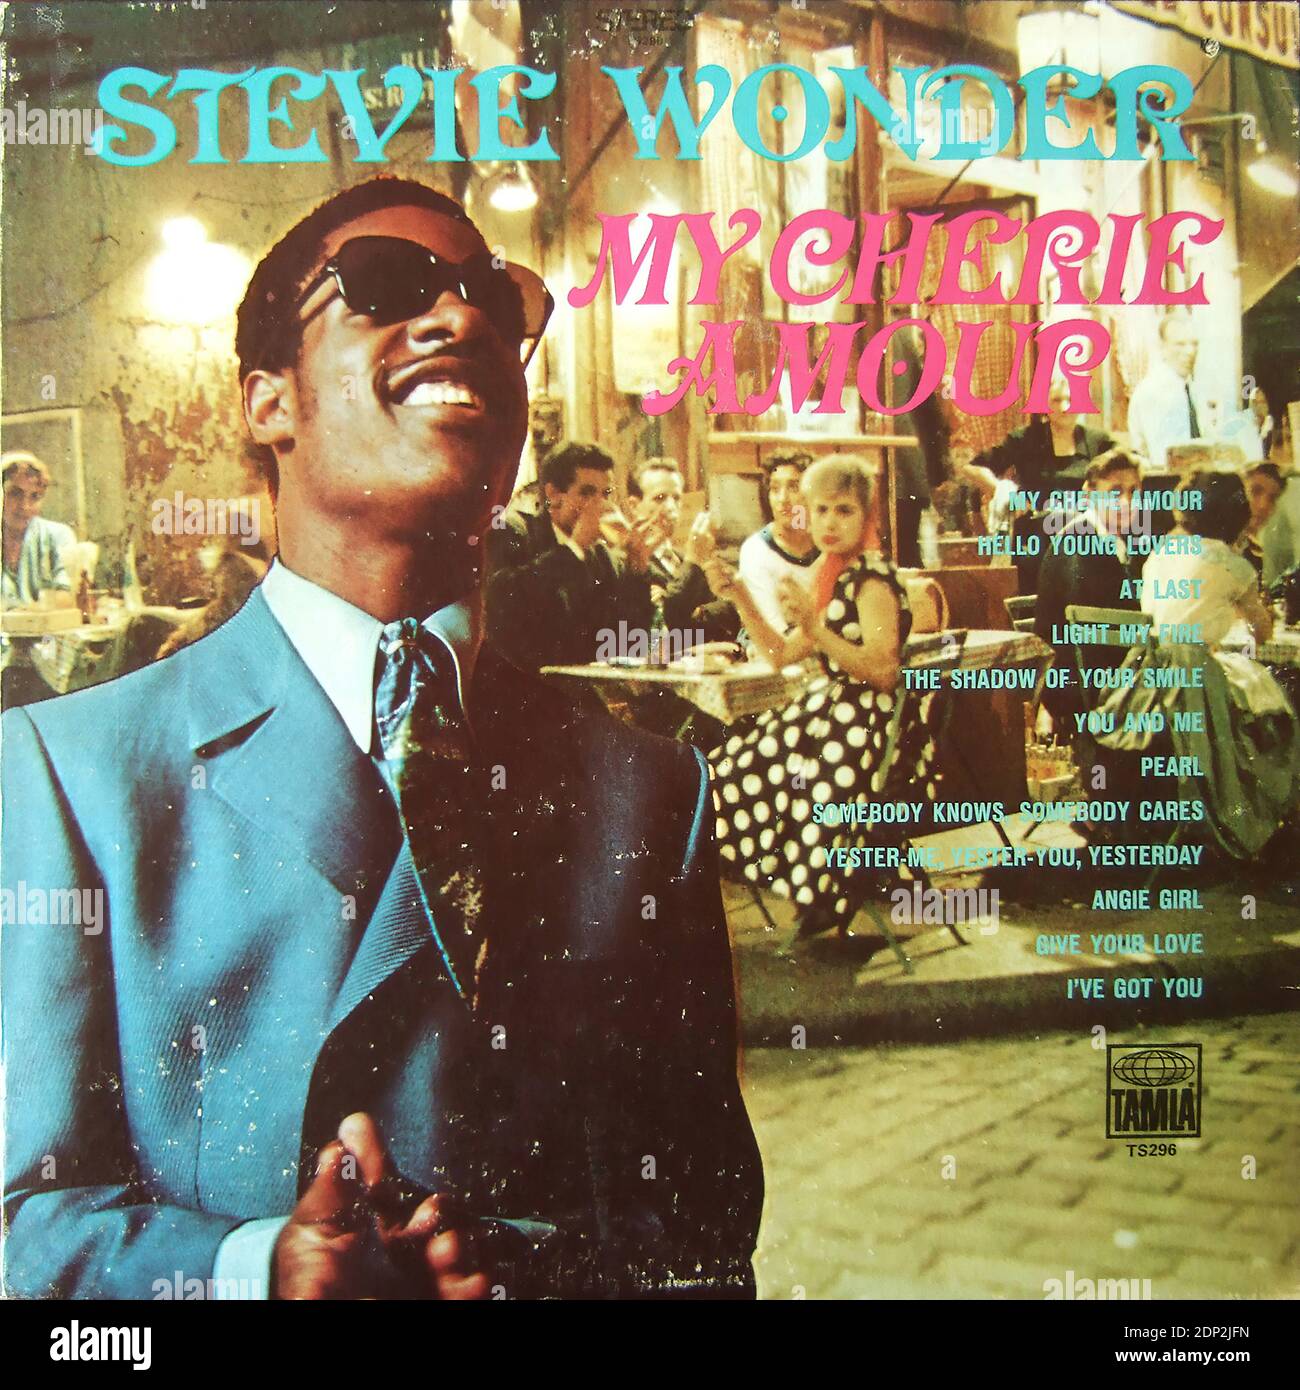 Stevie Wonder - My Cherie - Vintage vinyl album cover Stock Photo - Alamy